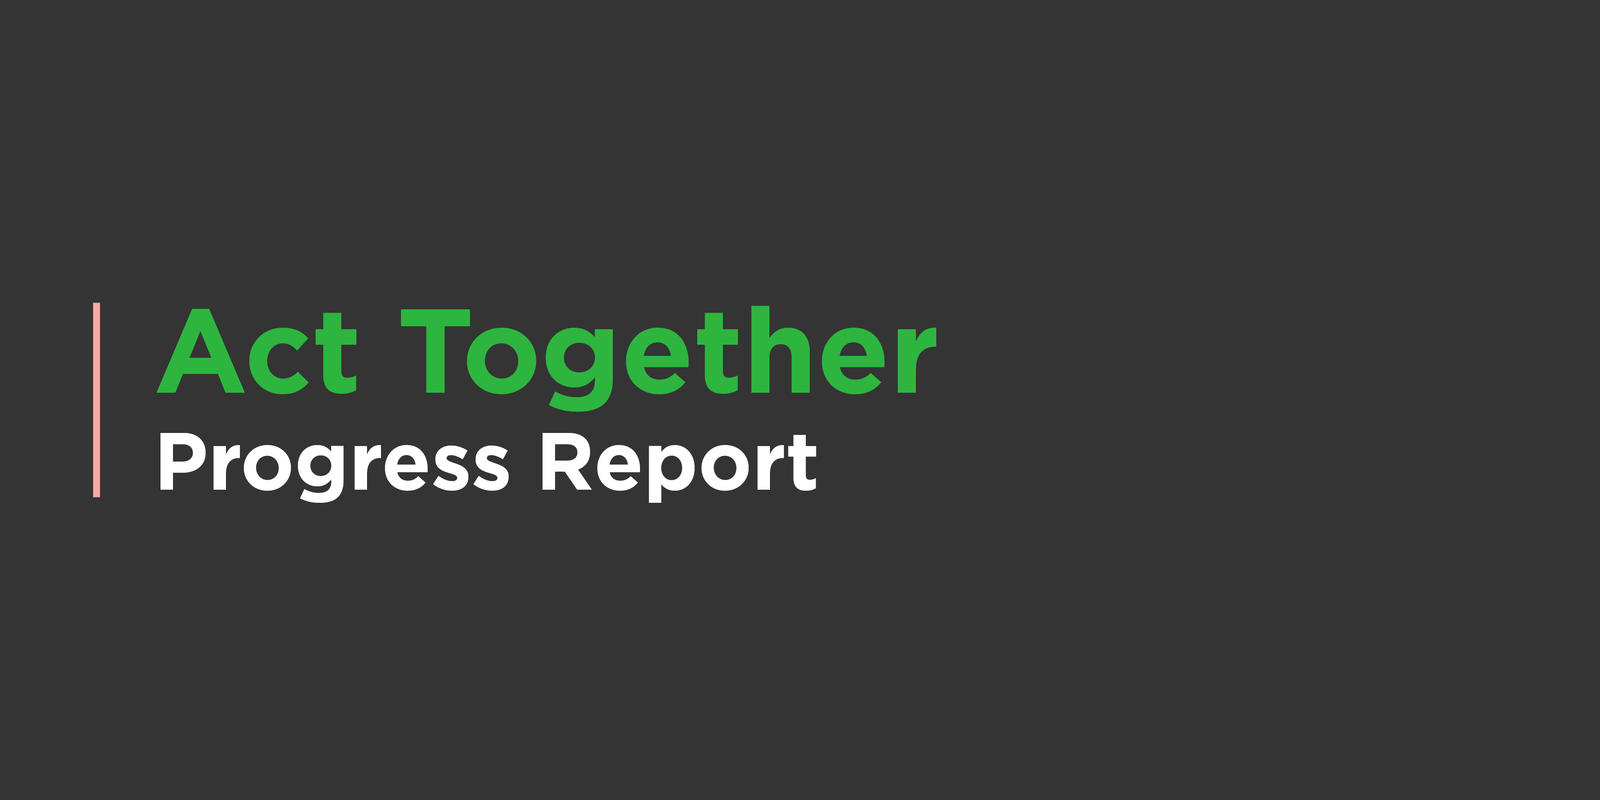 Act Together Progress Report v2